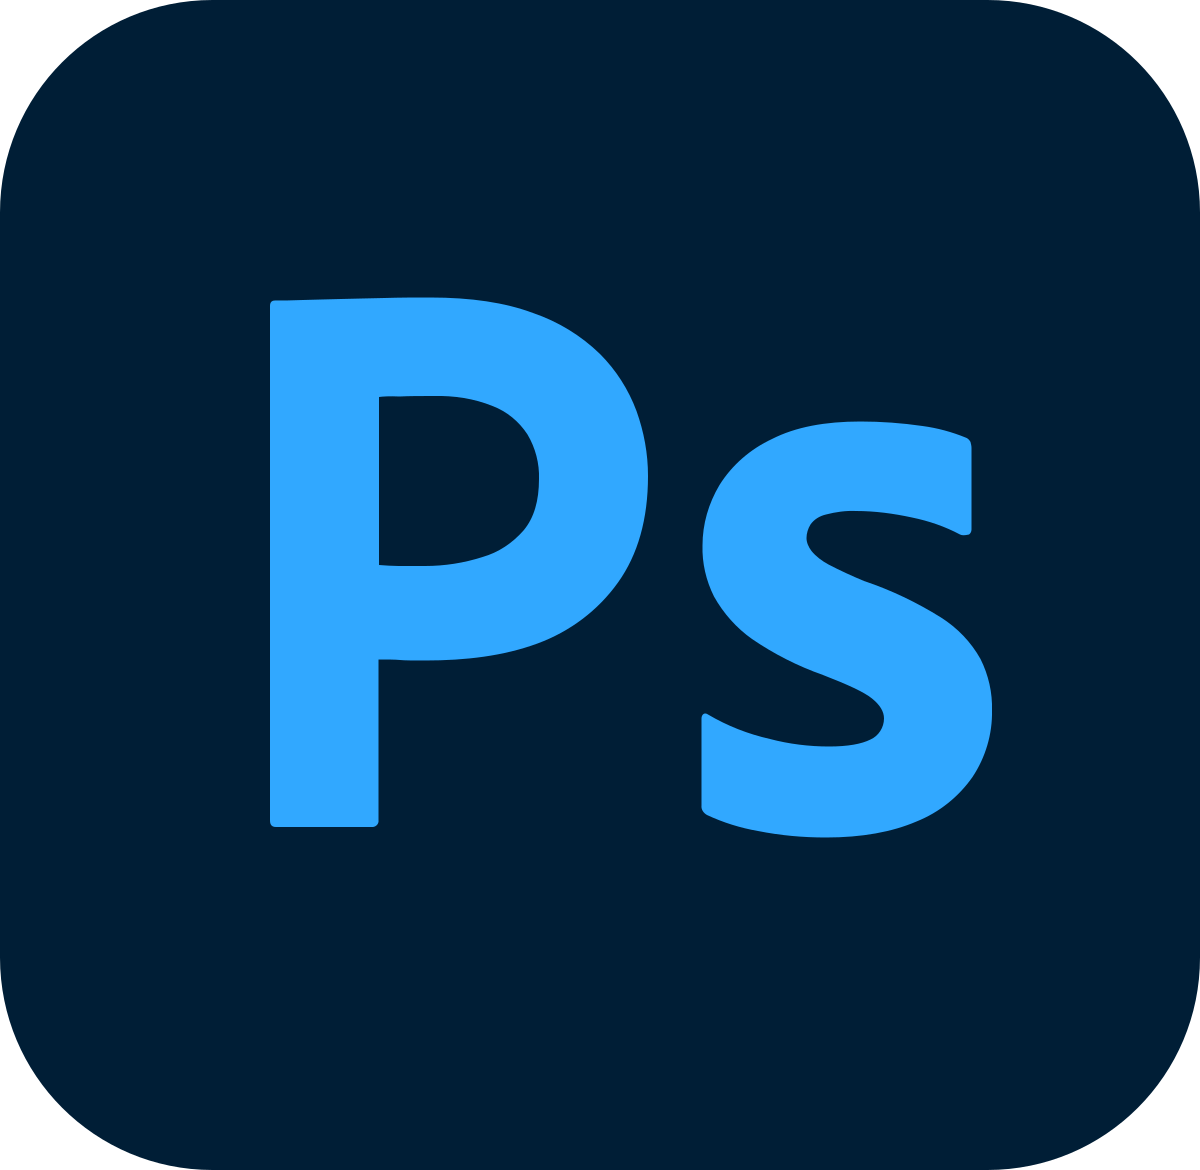 adobe photoshop lightroom 3 free download for mac